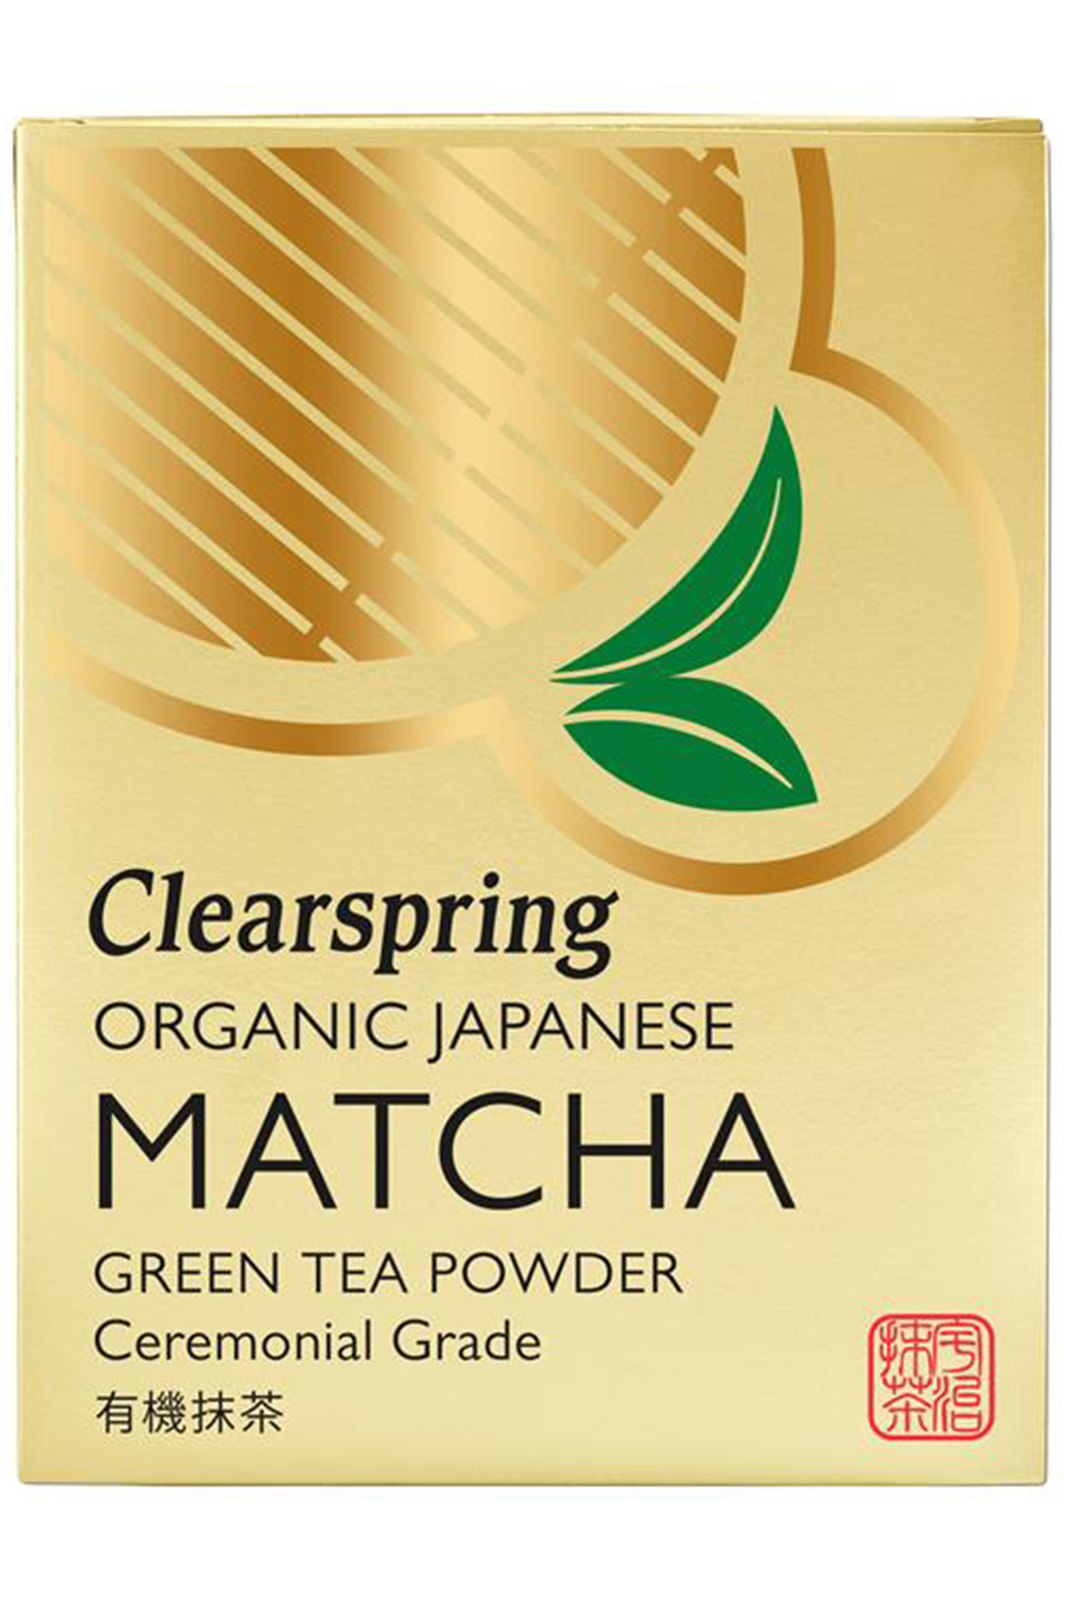 Ceremonial Grade Matcha Green Tea,  30g (Clearspring)